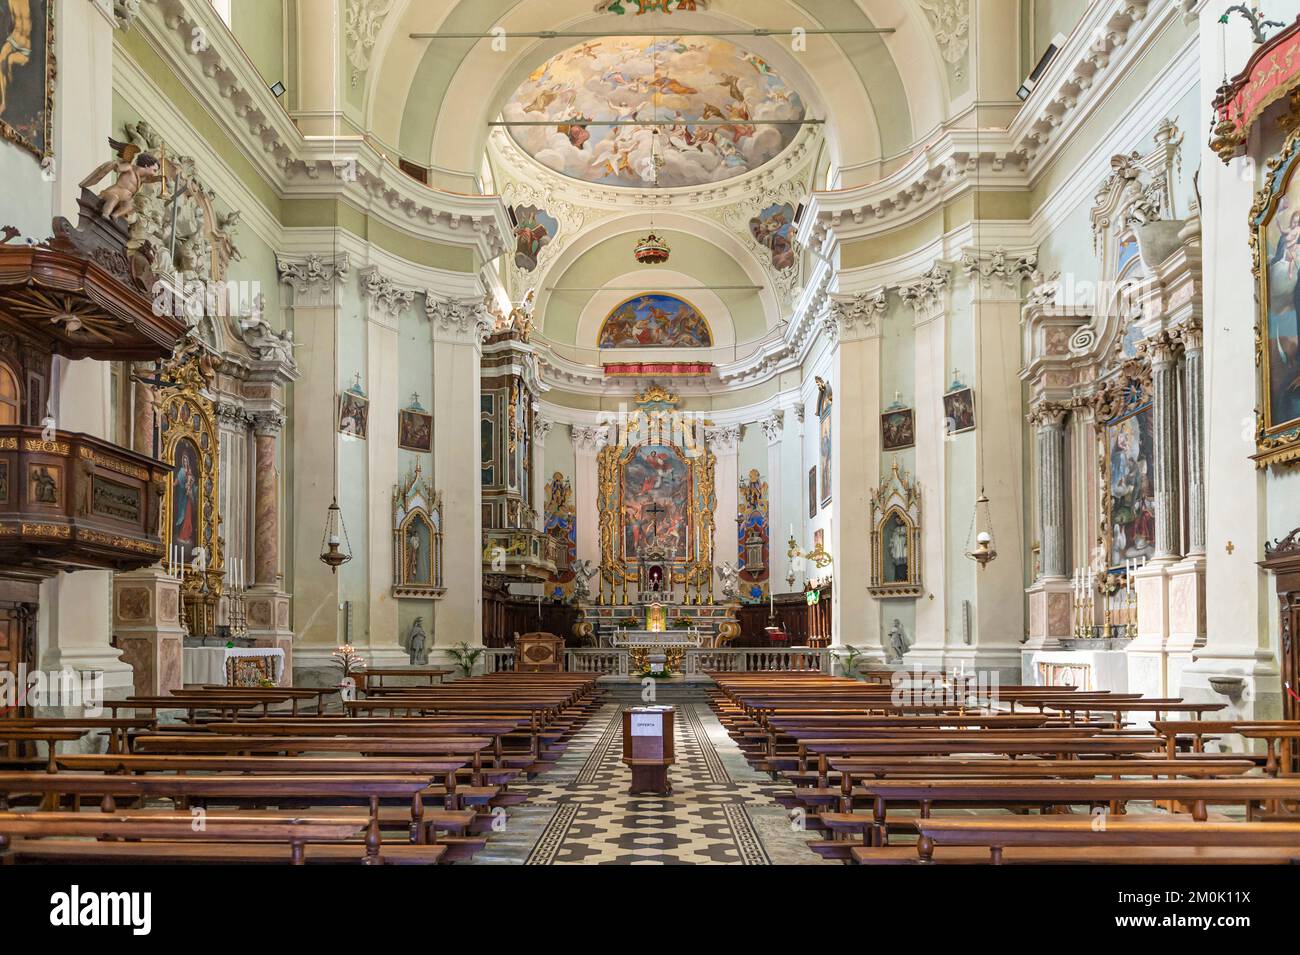 église des saints giustino et giovita, malonno, italie Banque D'Images